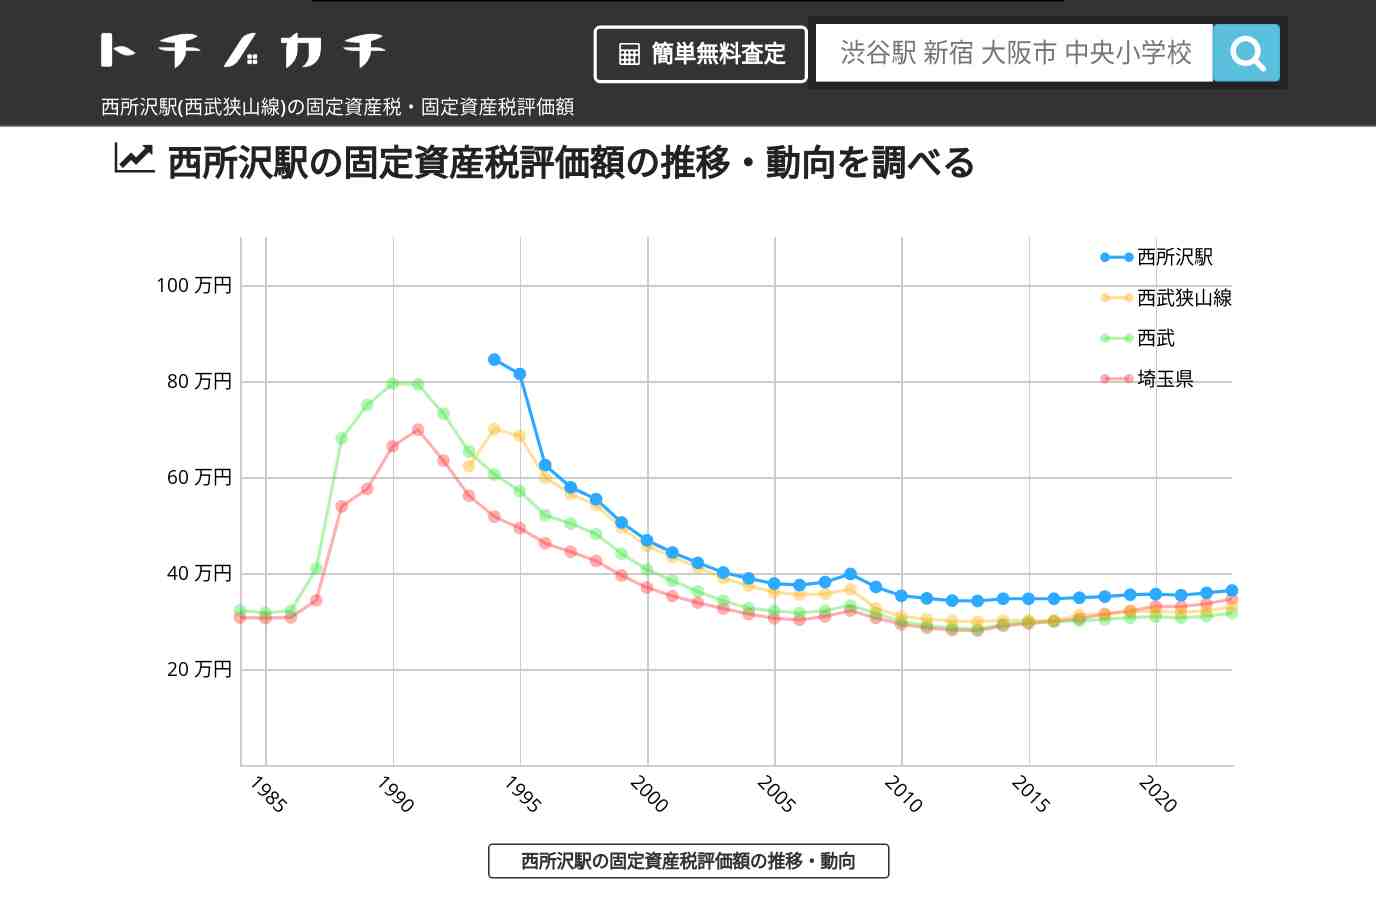 西所沢駅(西武狭山線)の固定資産税・固定資産税評価額 | トチノカチ